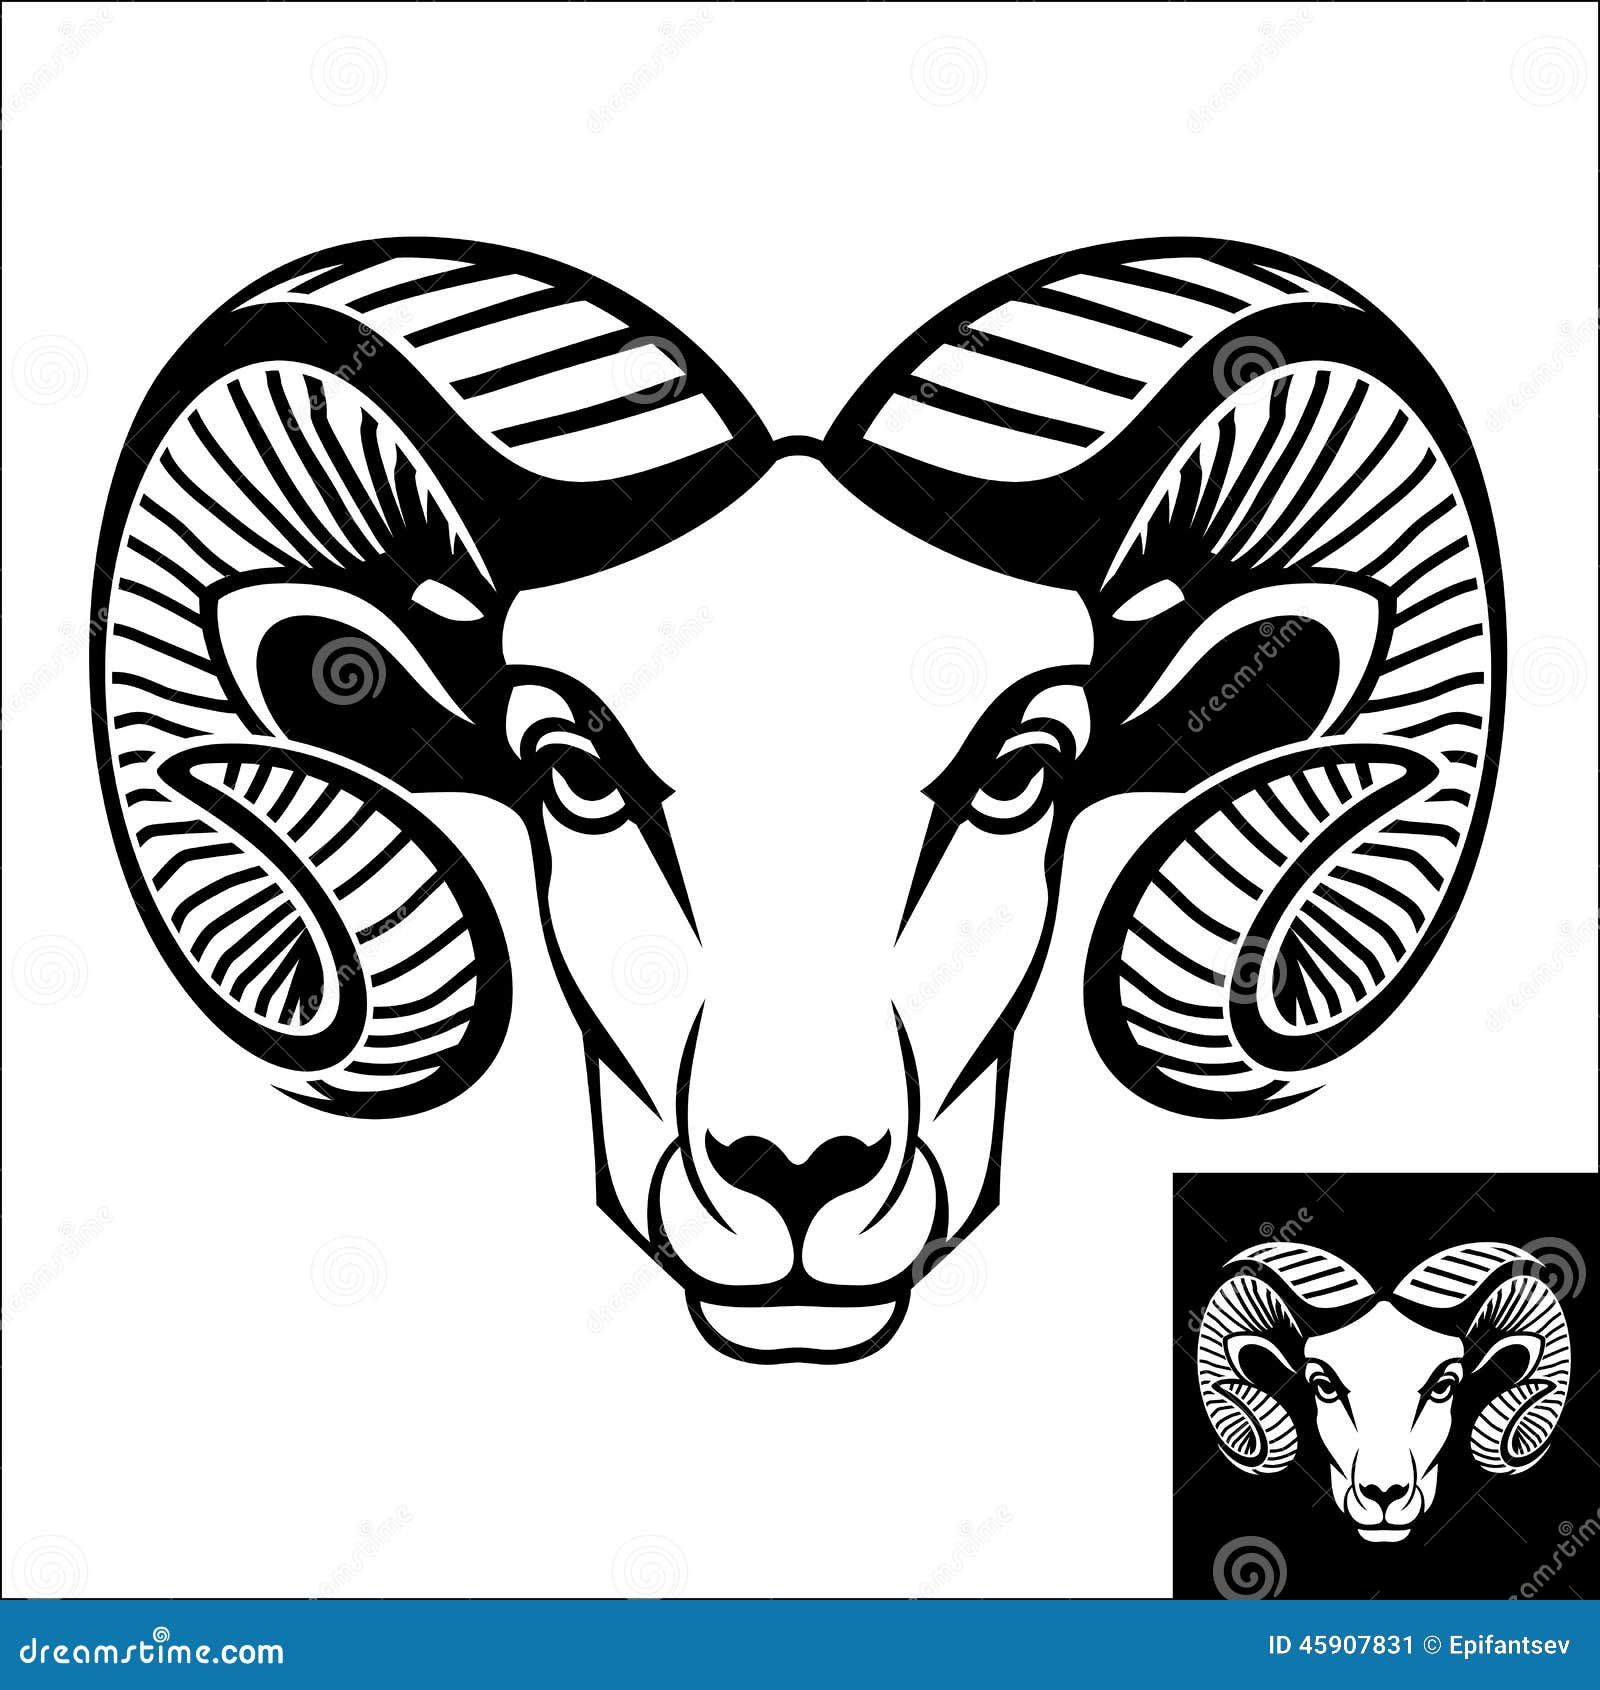 Ram Head Logo Or Icon Stock Vector - Image: 45907831